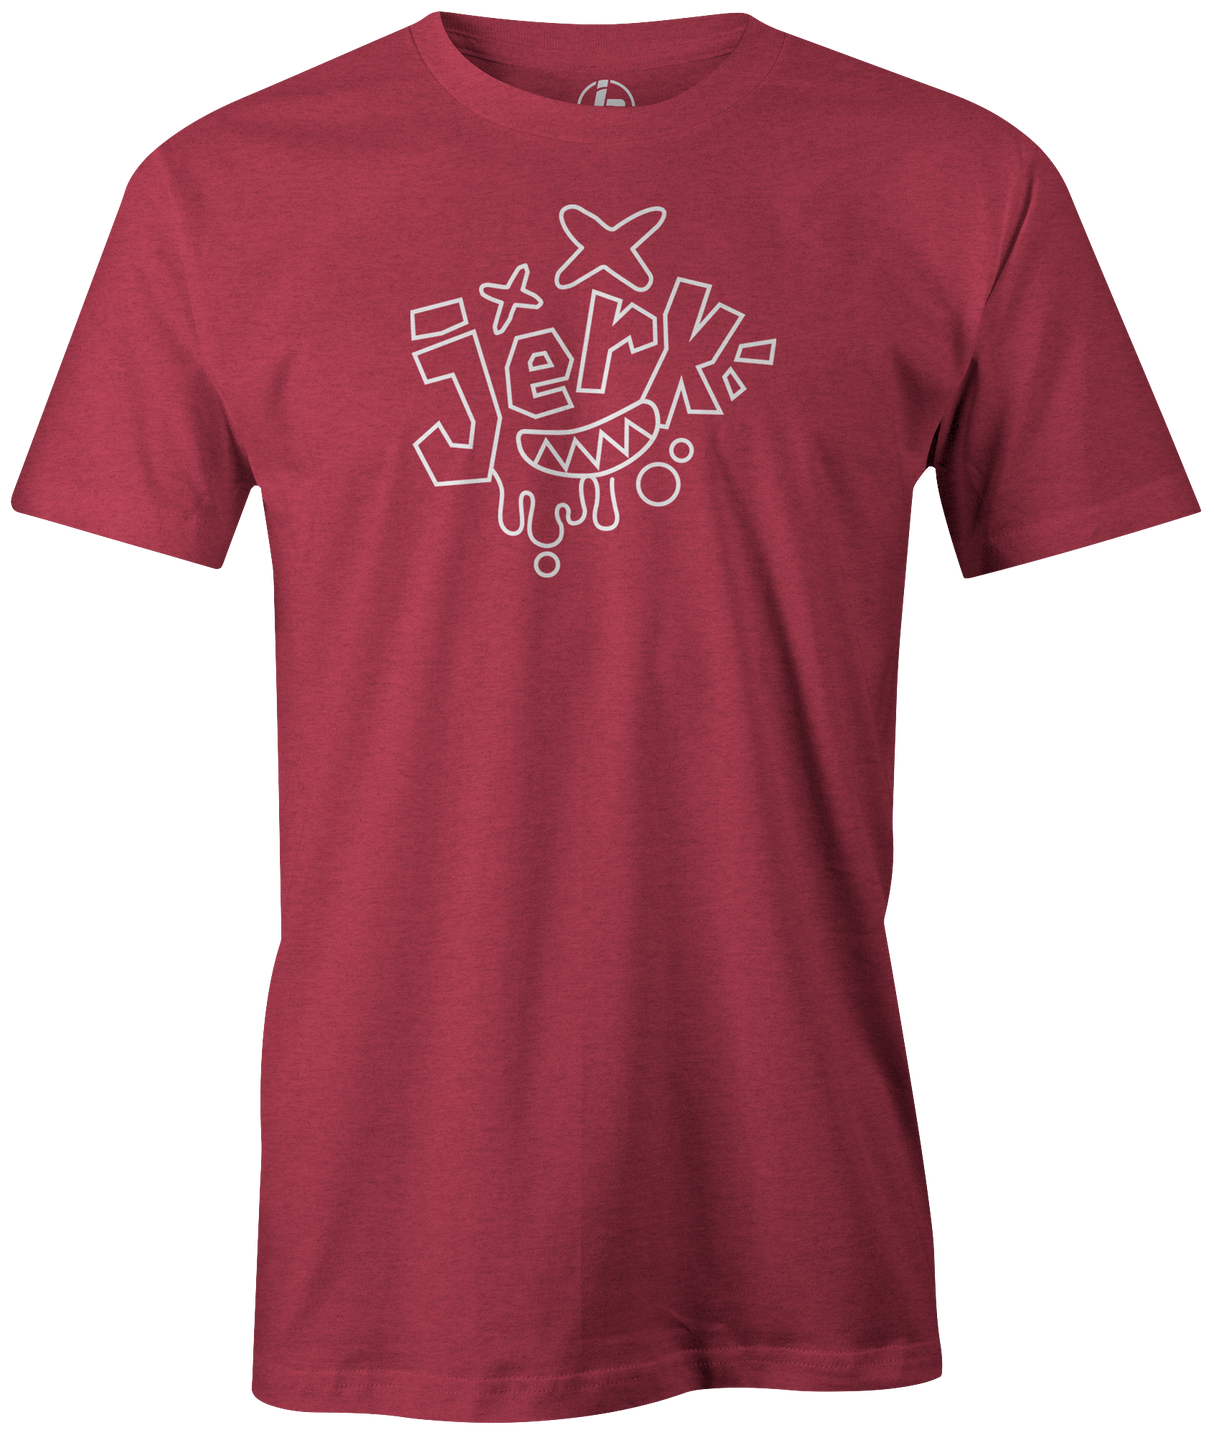 Swag Bowling Jerk Classic Logo T-shirt. This shirt is perfect for bowling practice, leagues or weekend tournaments. Men's T-Shirt, bowling ball, tee, tee shirt, tee-shirt, t shirt, t-shirt, tees, league, tournament shirt, PBA, PWBA, USBC. Charcoal, Black, Purple, Red